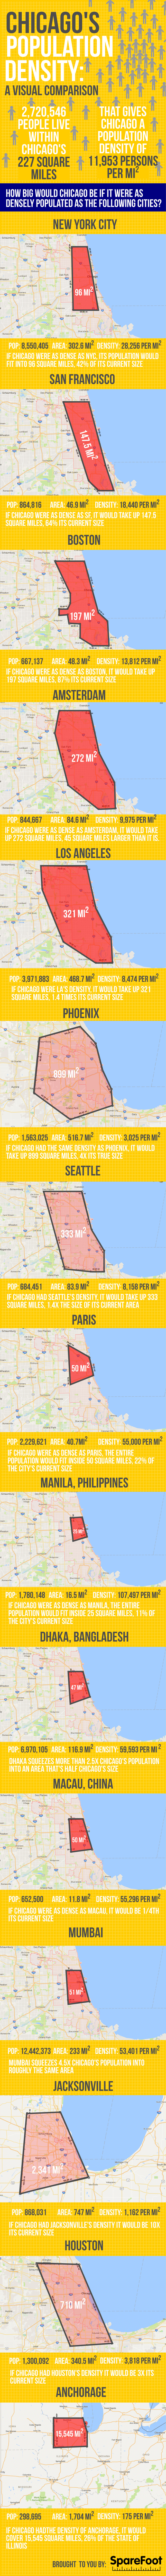 chicago-density-sparefoot-chicago-storage-units